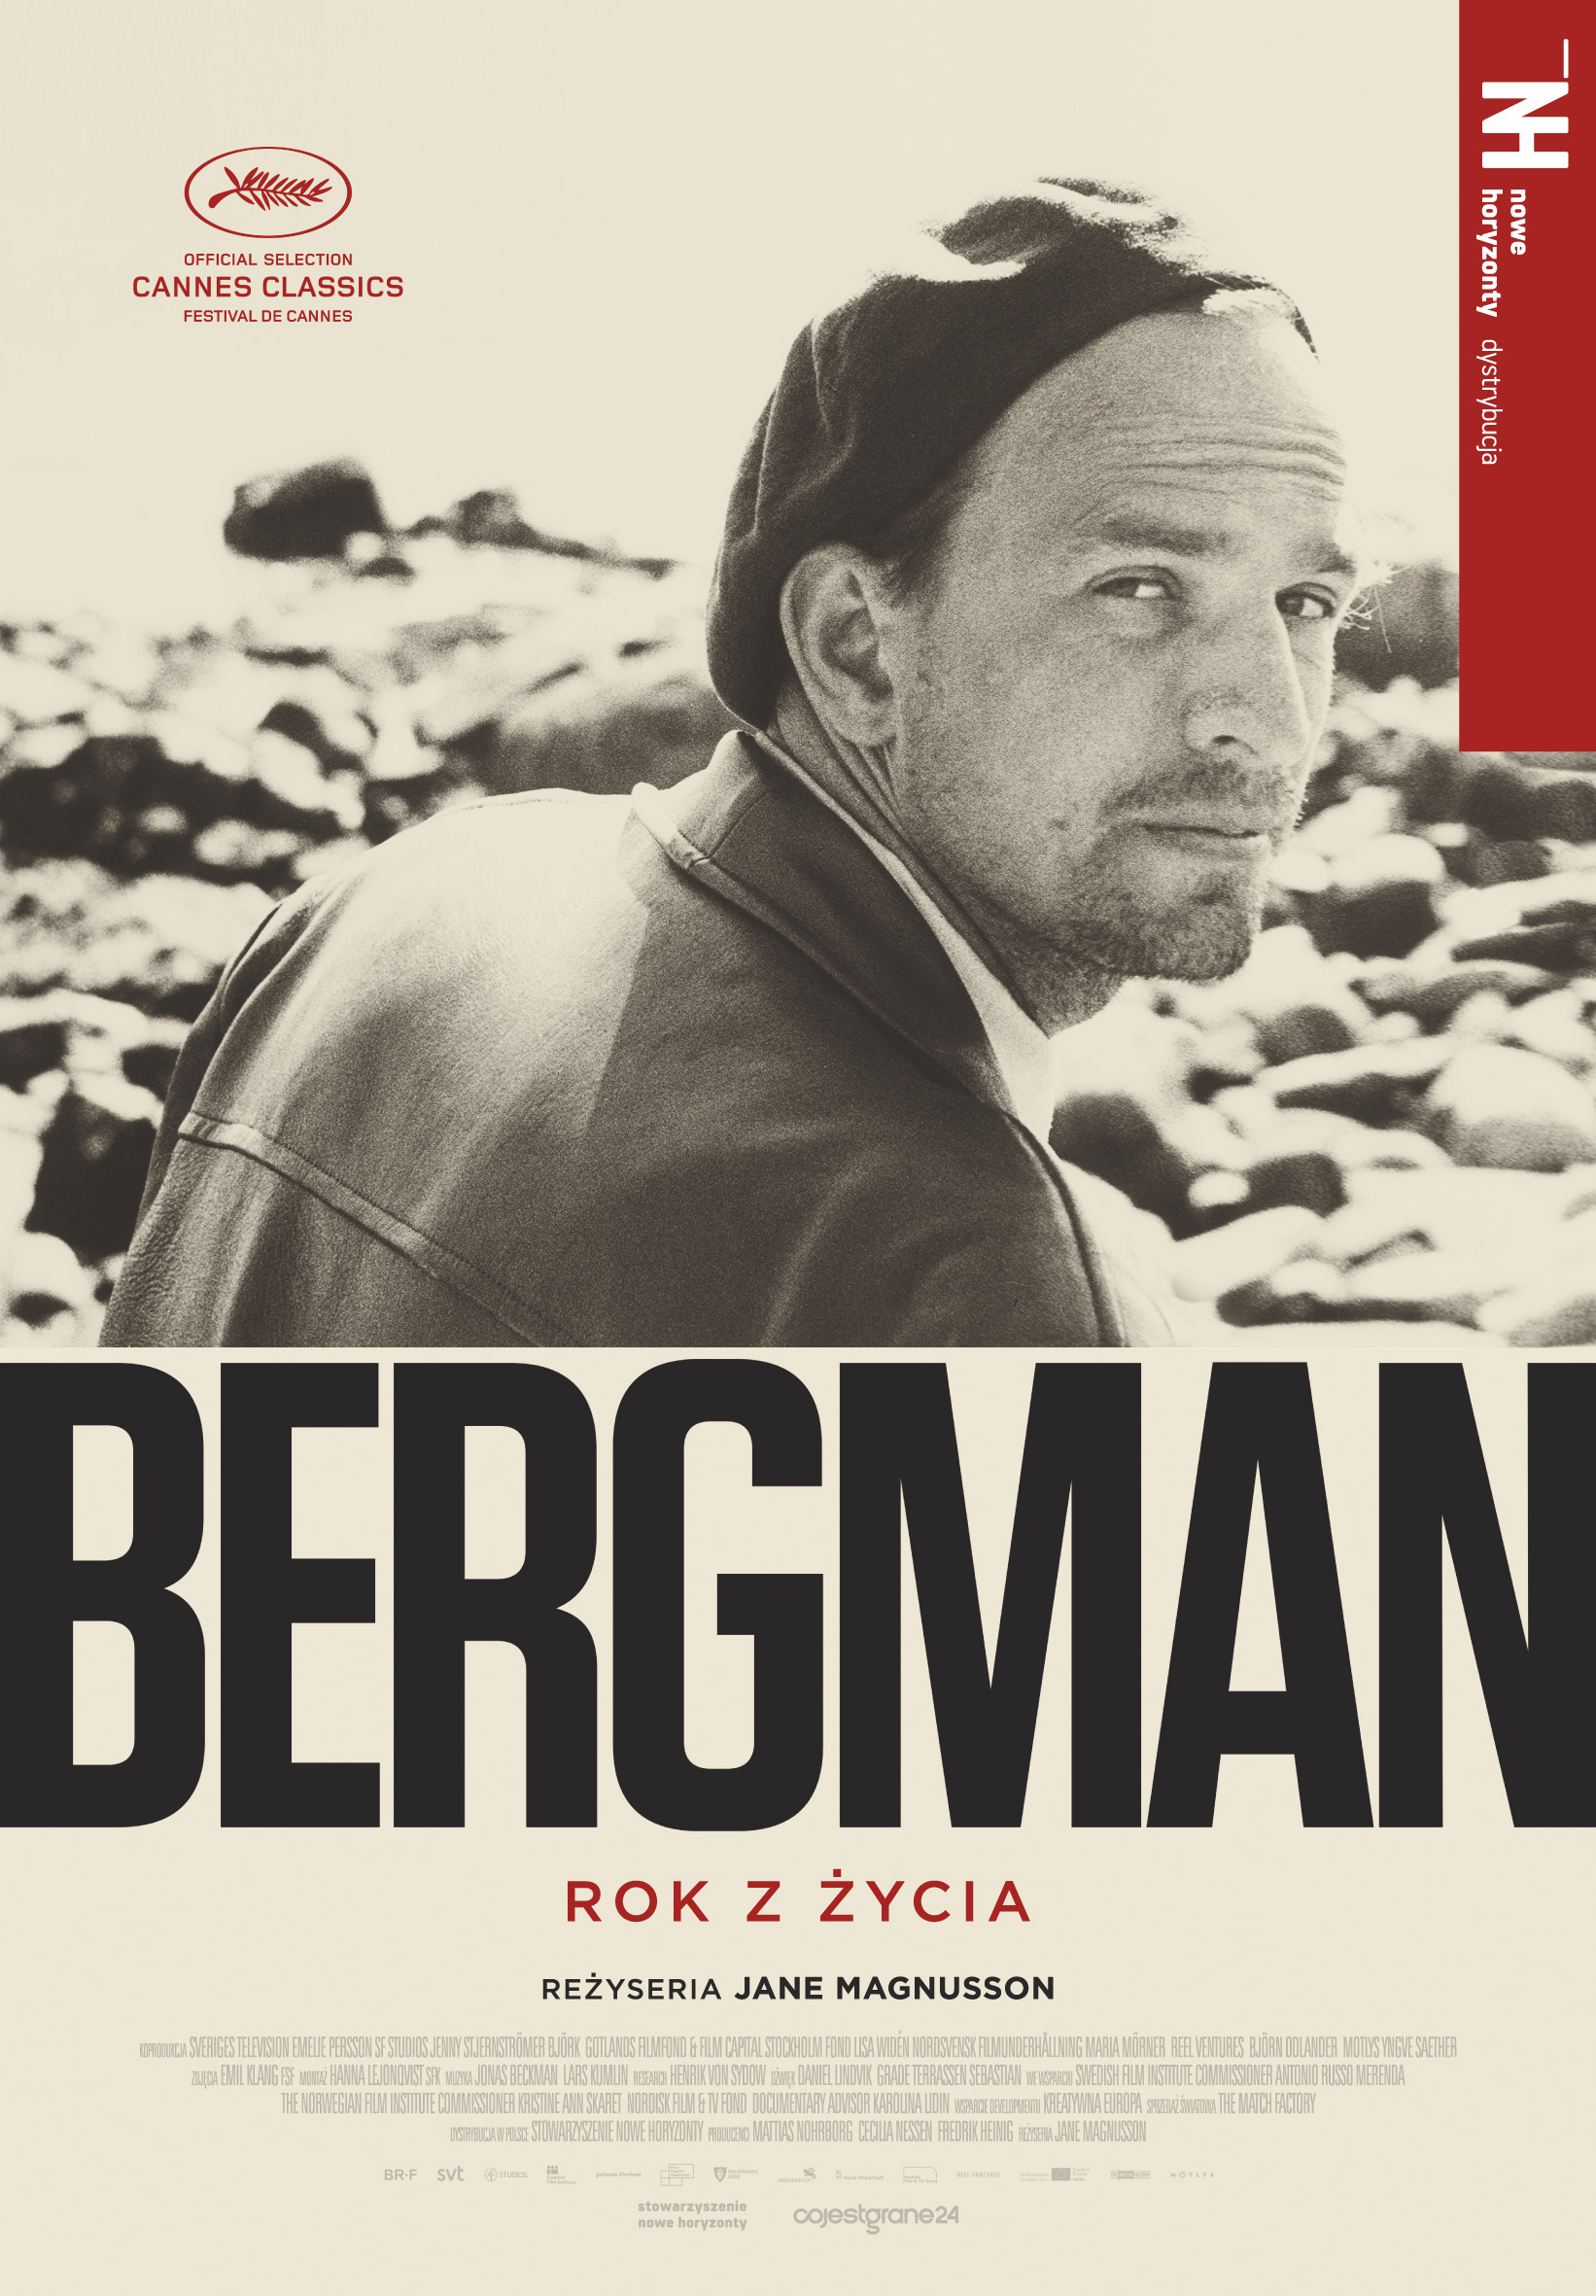 KINO PO STAREMU „Bergman – rok z życia”